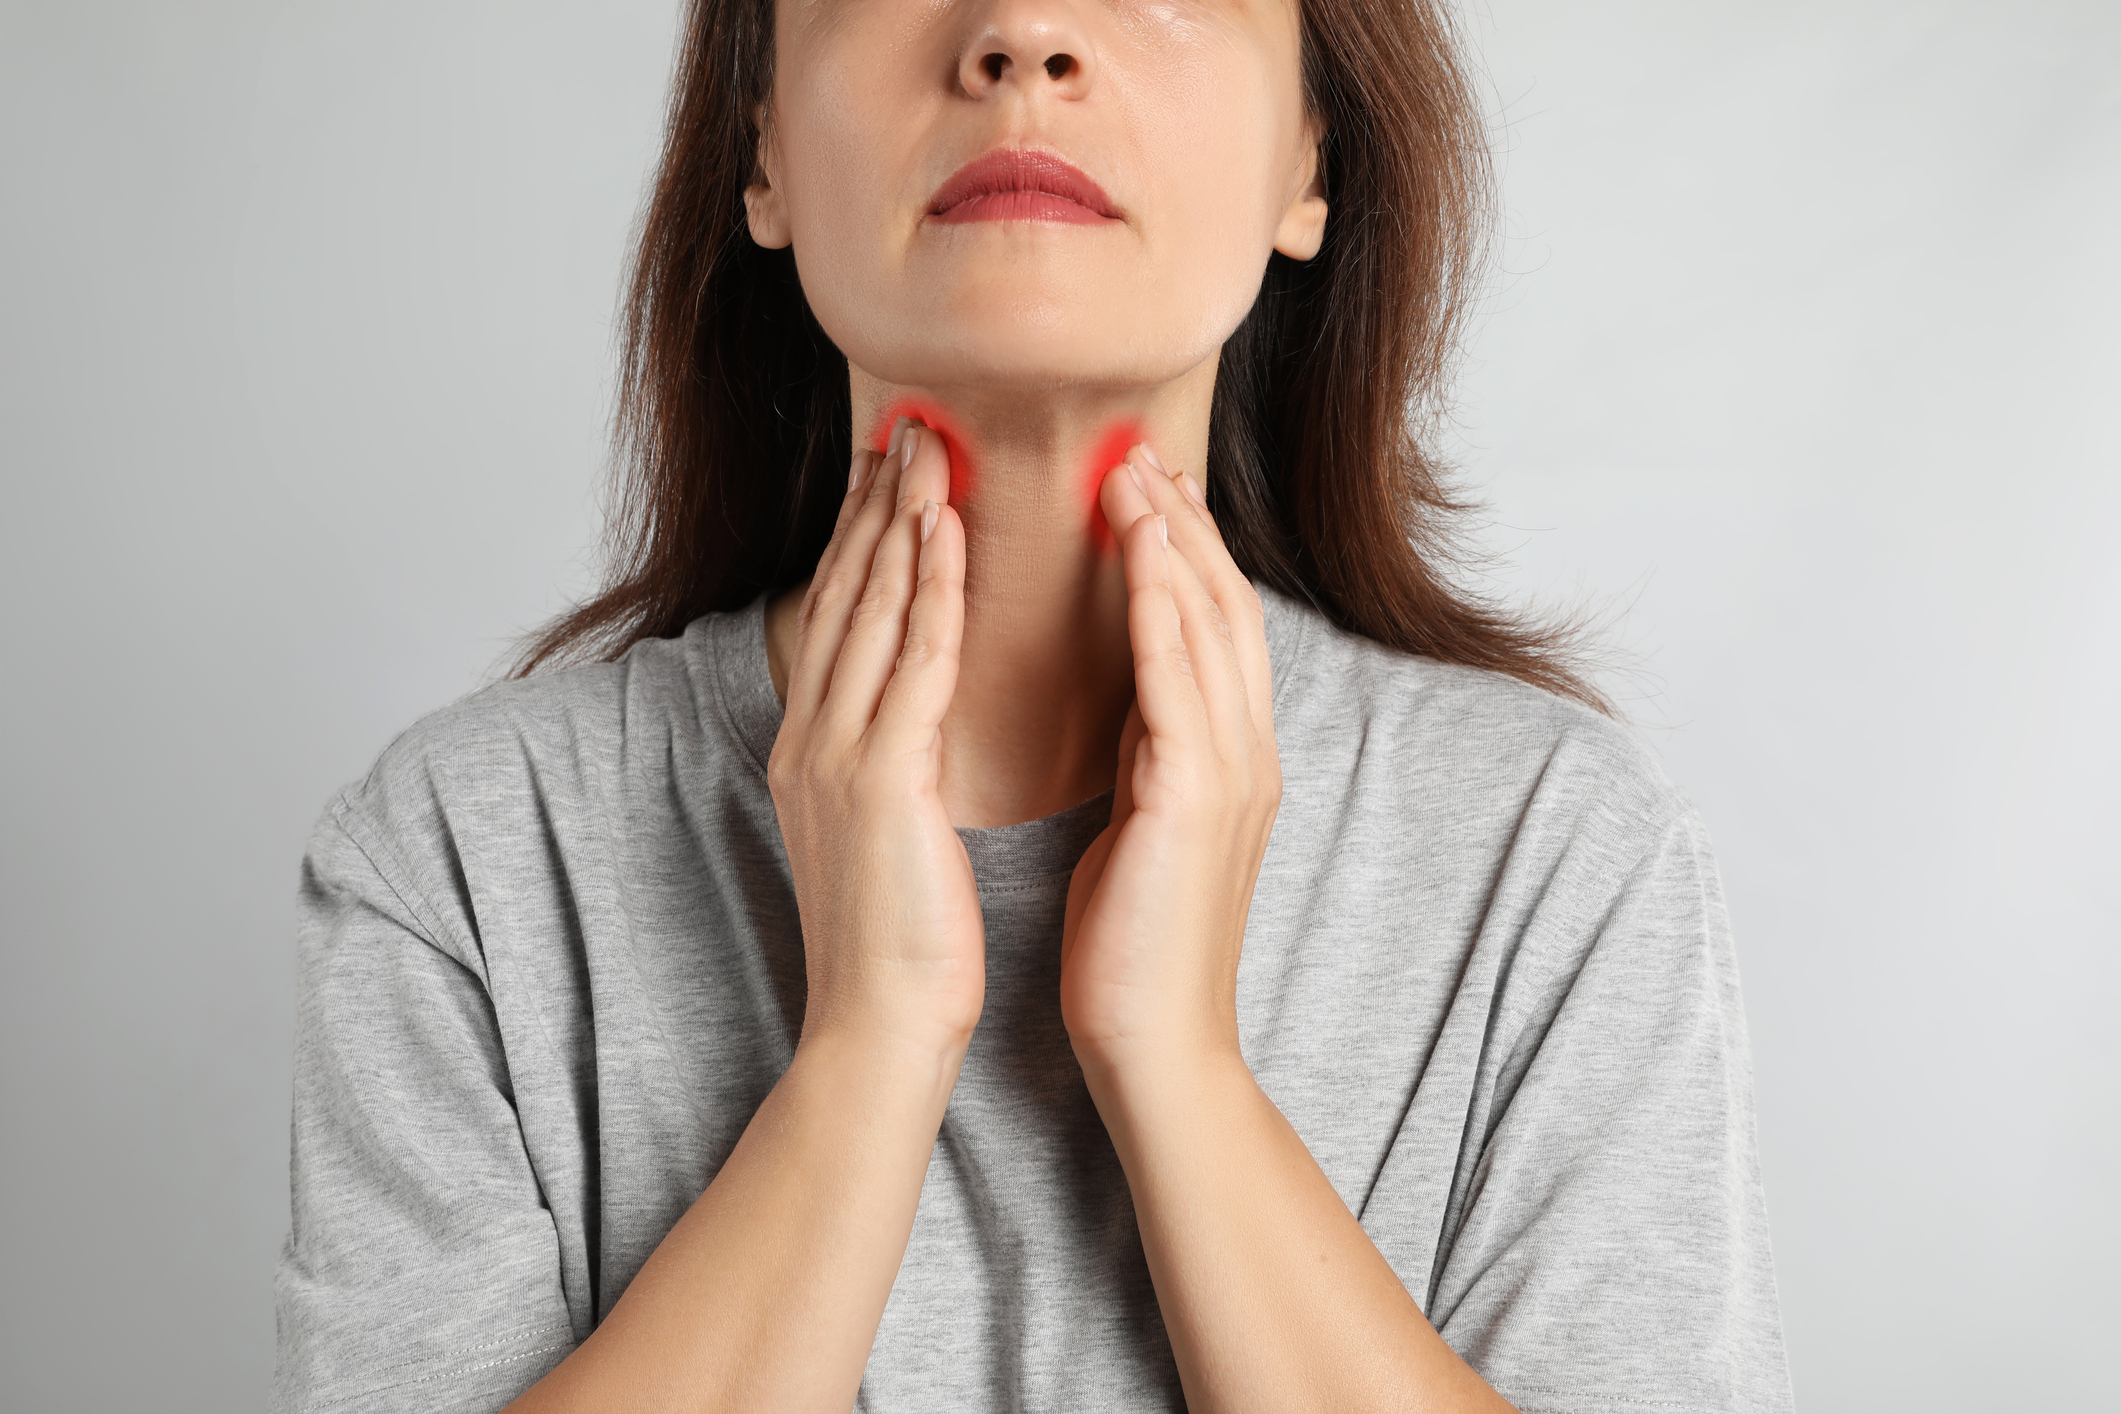 Hashimoto’s: An often misdiagnosed thyroid disorder